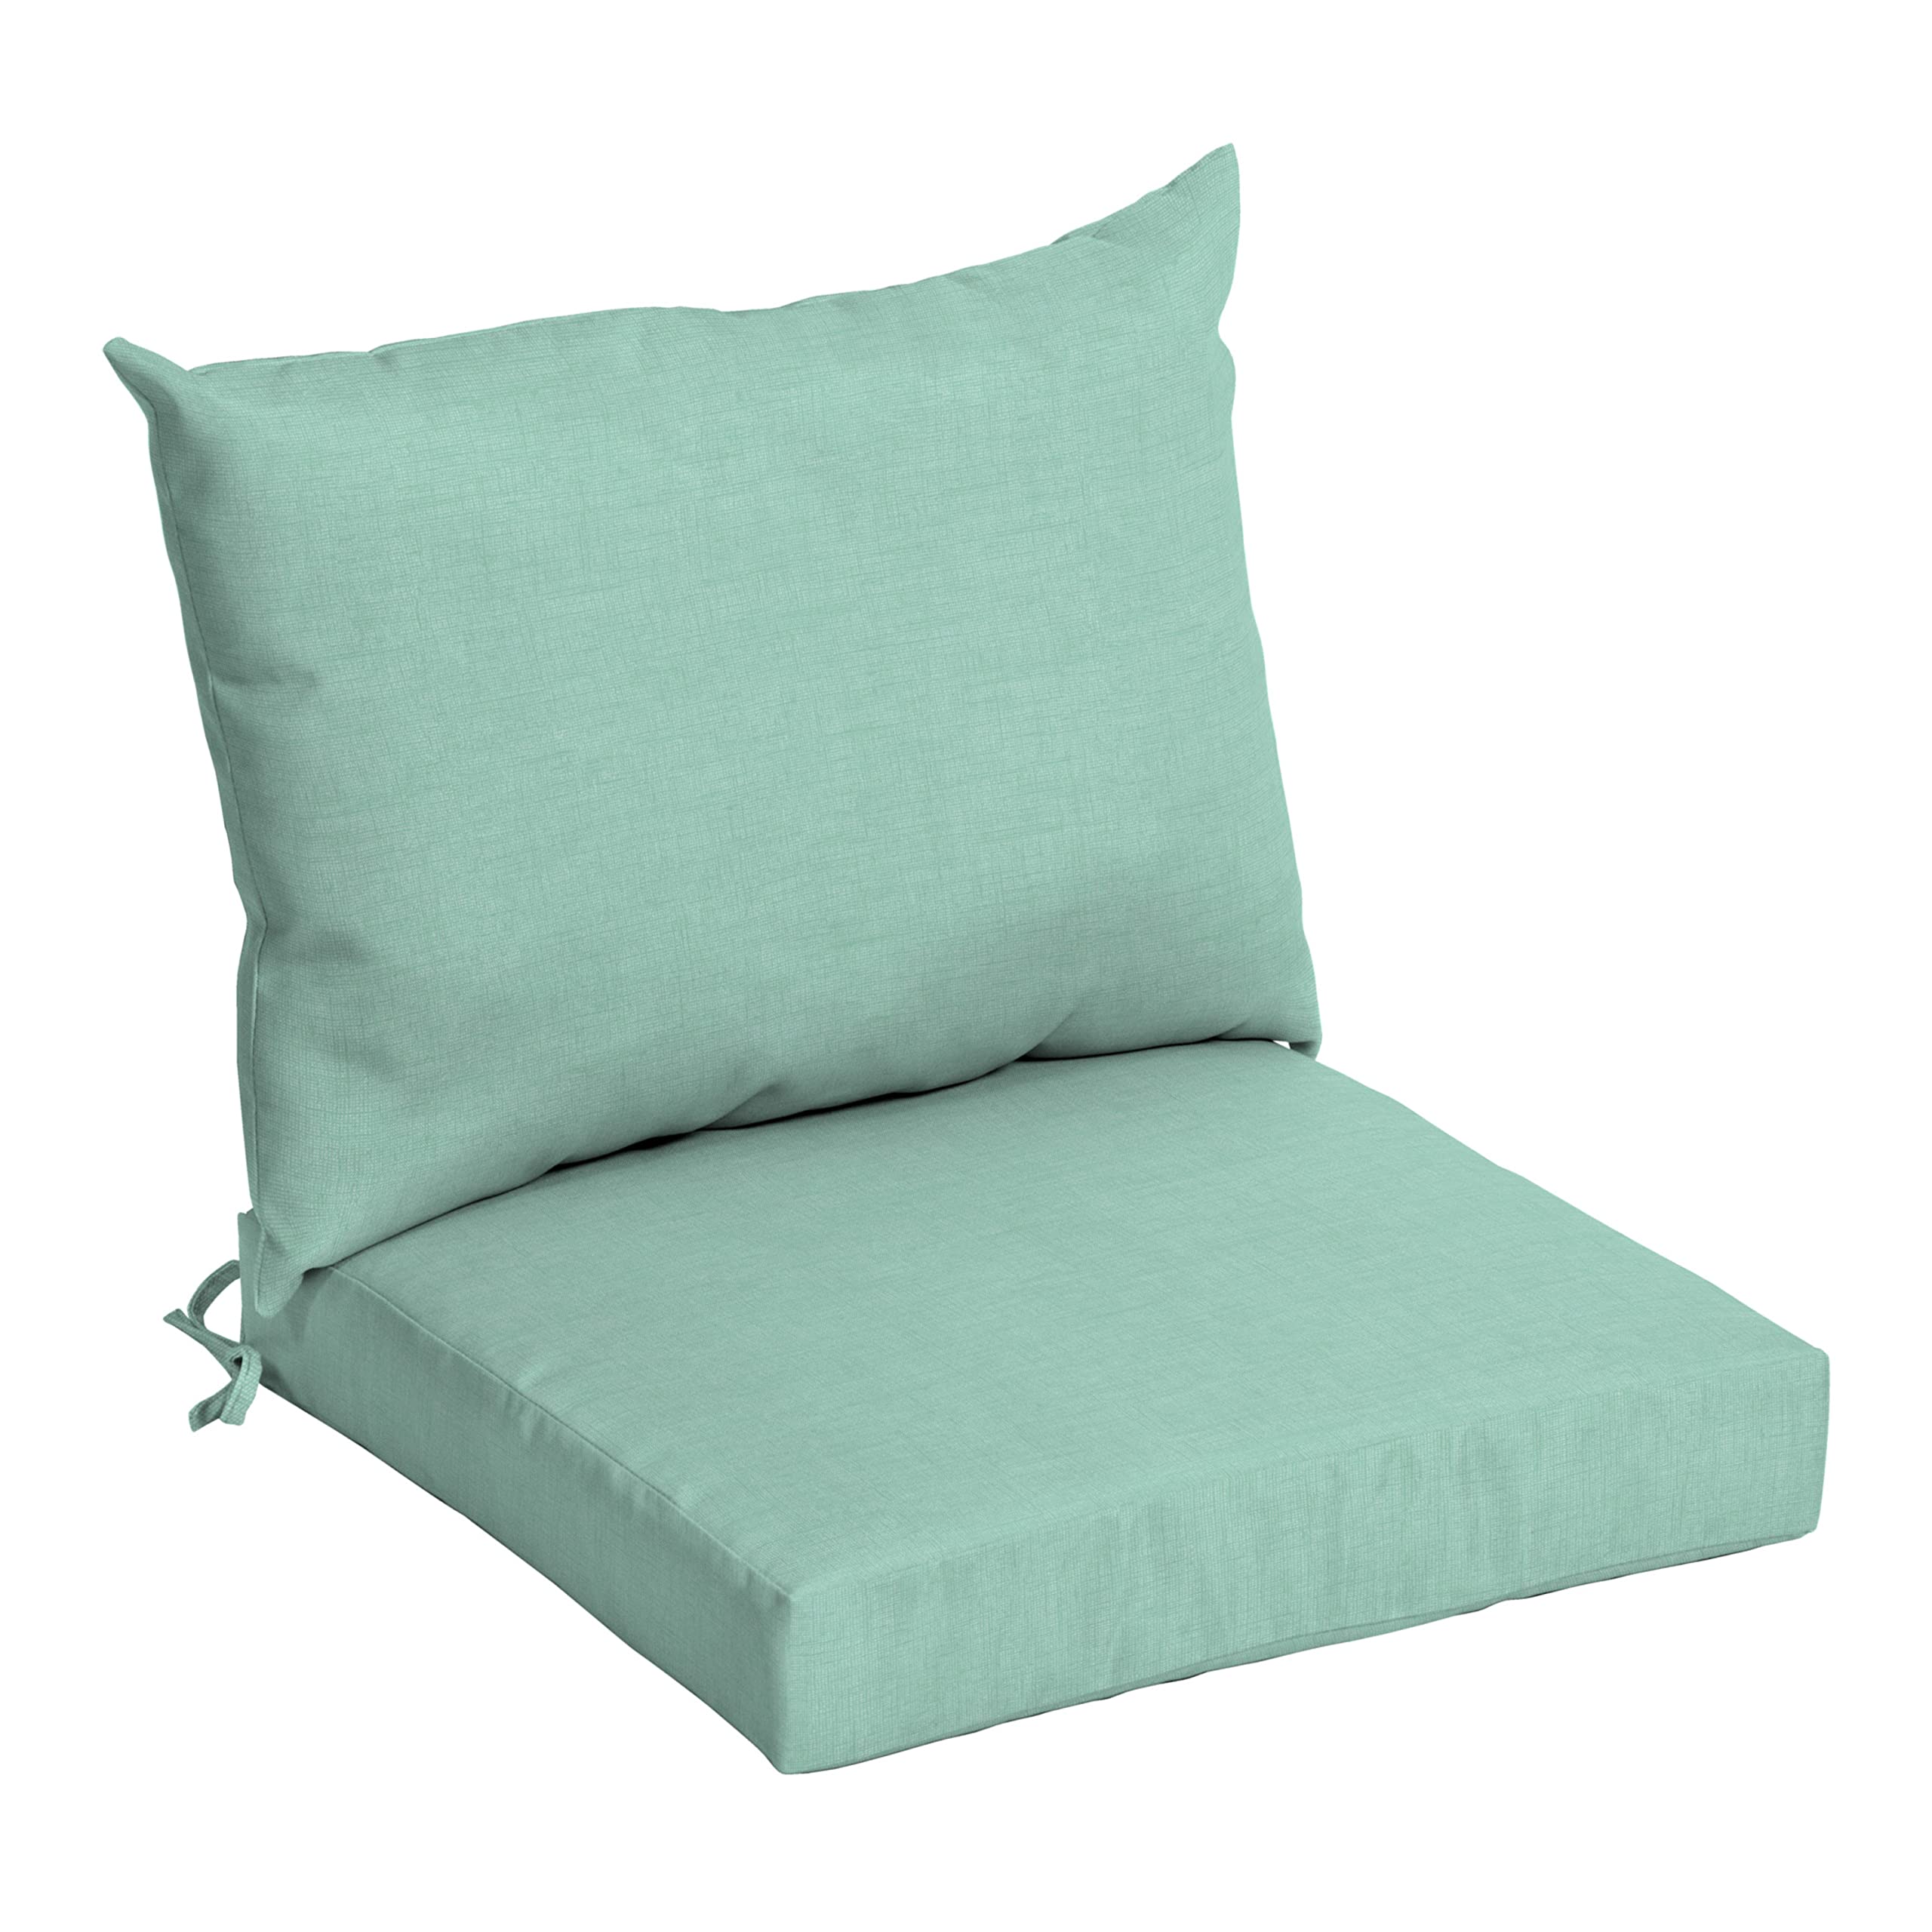 Arden Selections Outdoor Dining Chair Cushion Set 21 X 21, Aqua Leala